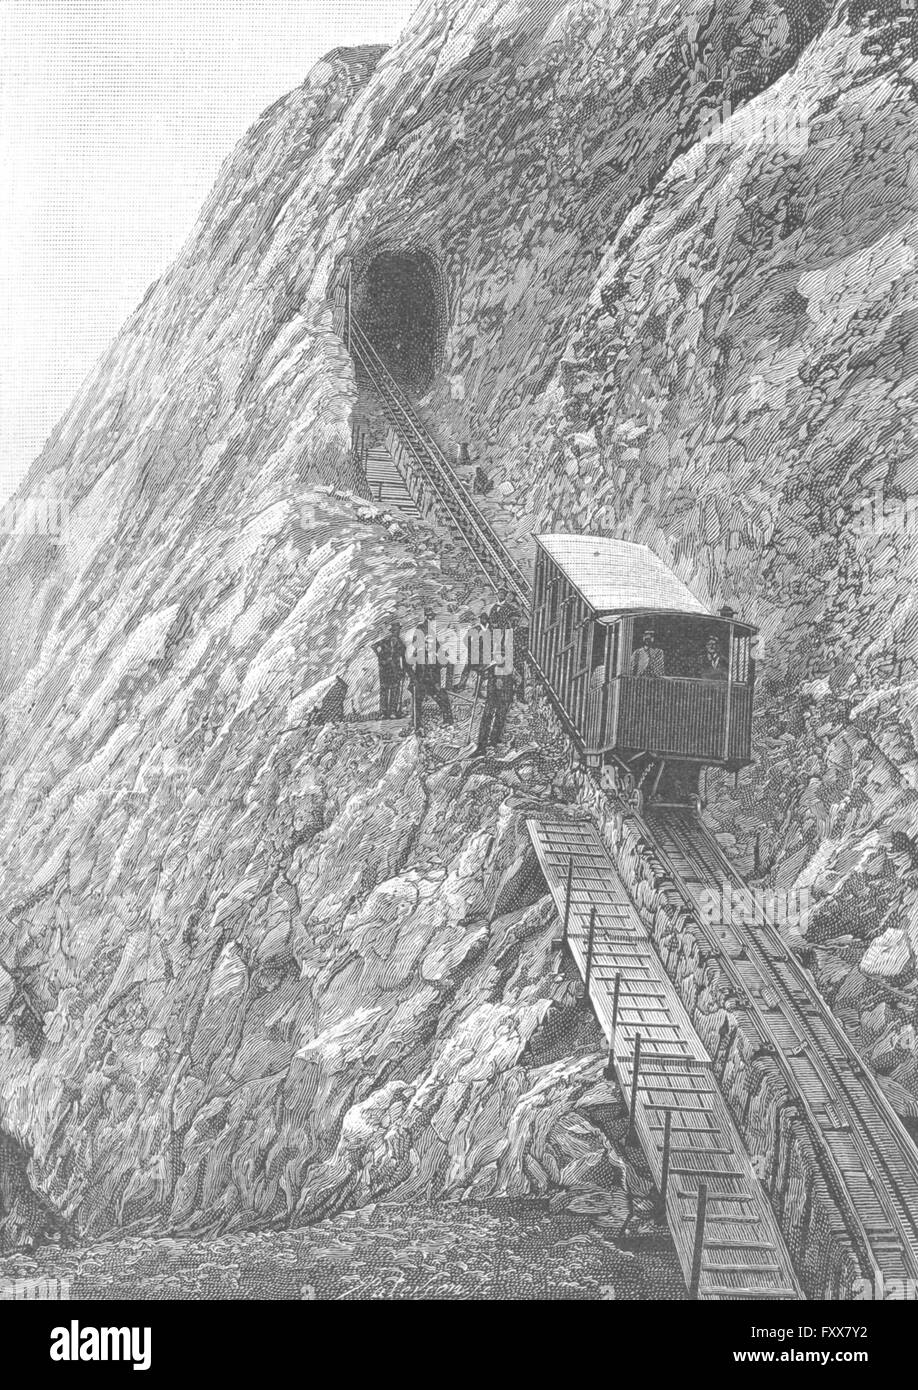 SWITZERLAND: Pilatus Railway, antique print 1891 Stock Photo